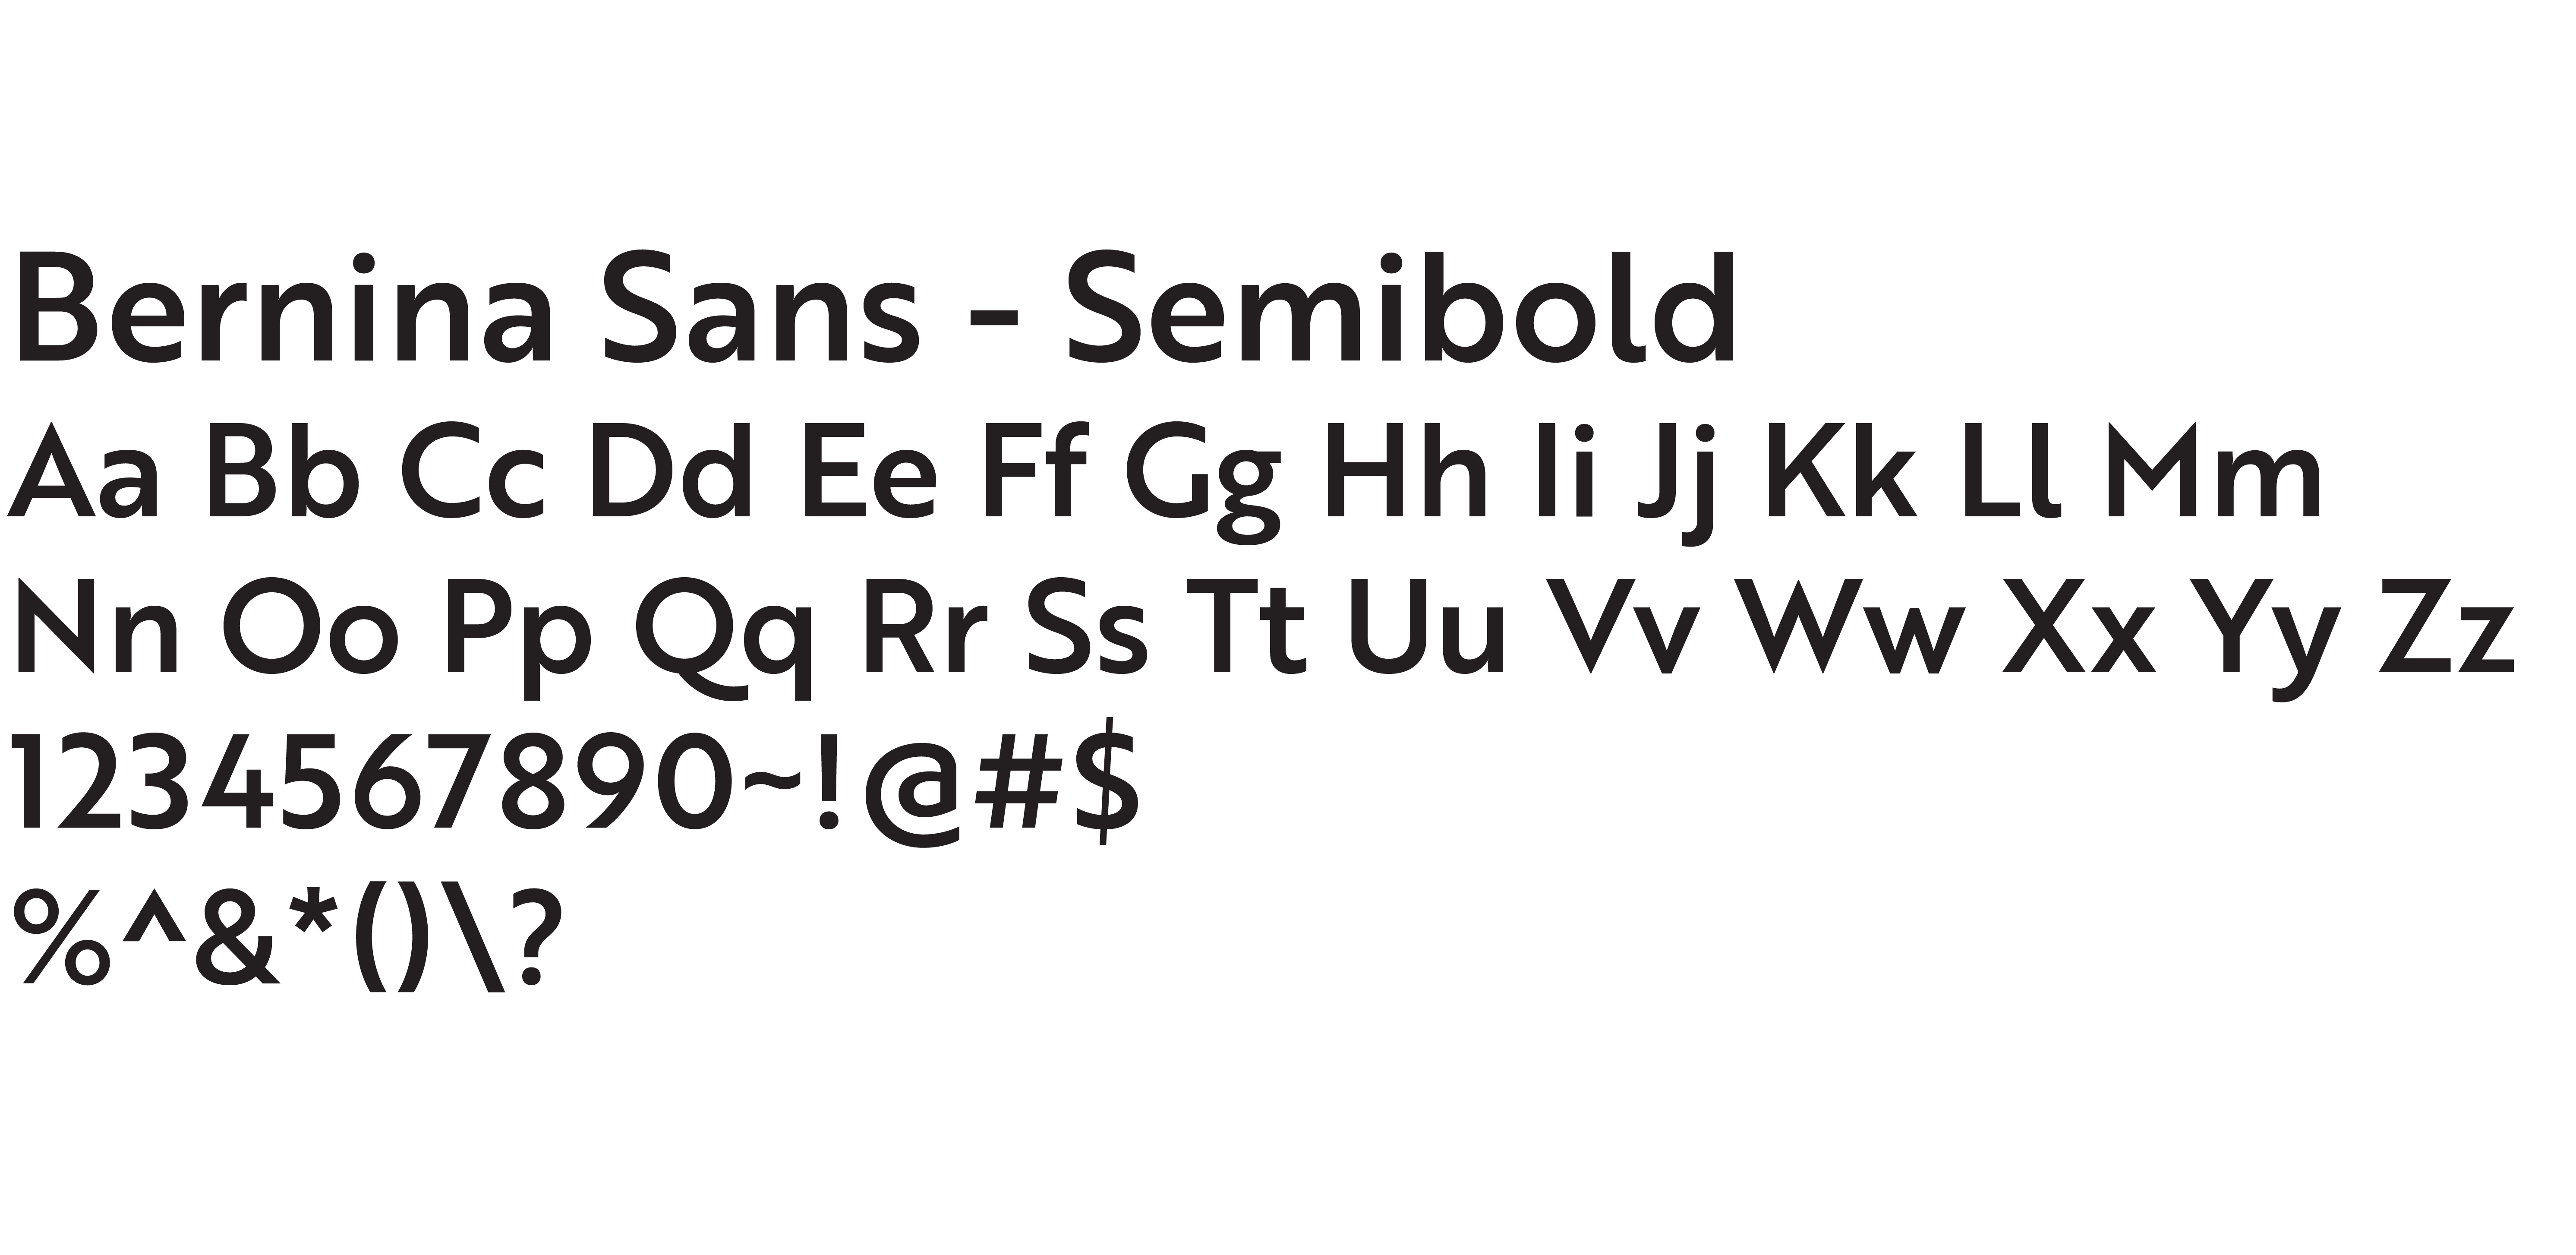 Type Study of the Little O project: Bernina Sans Semibold